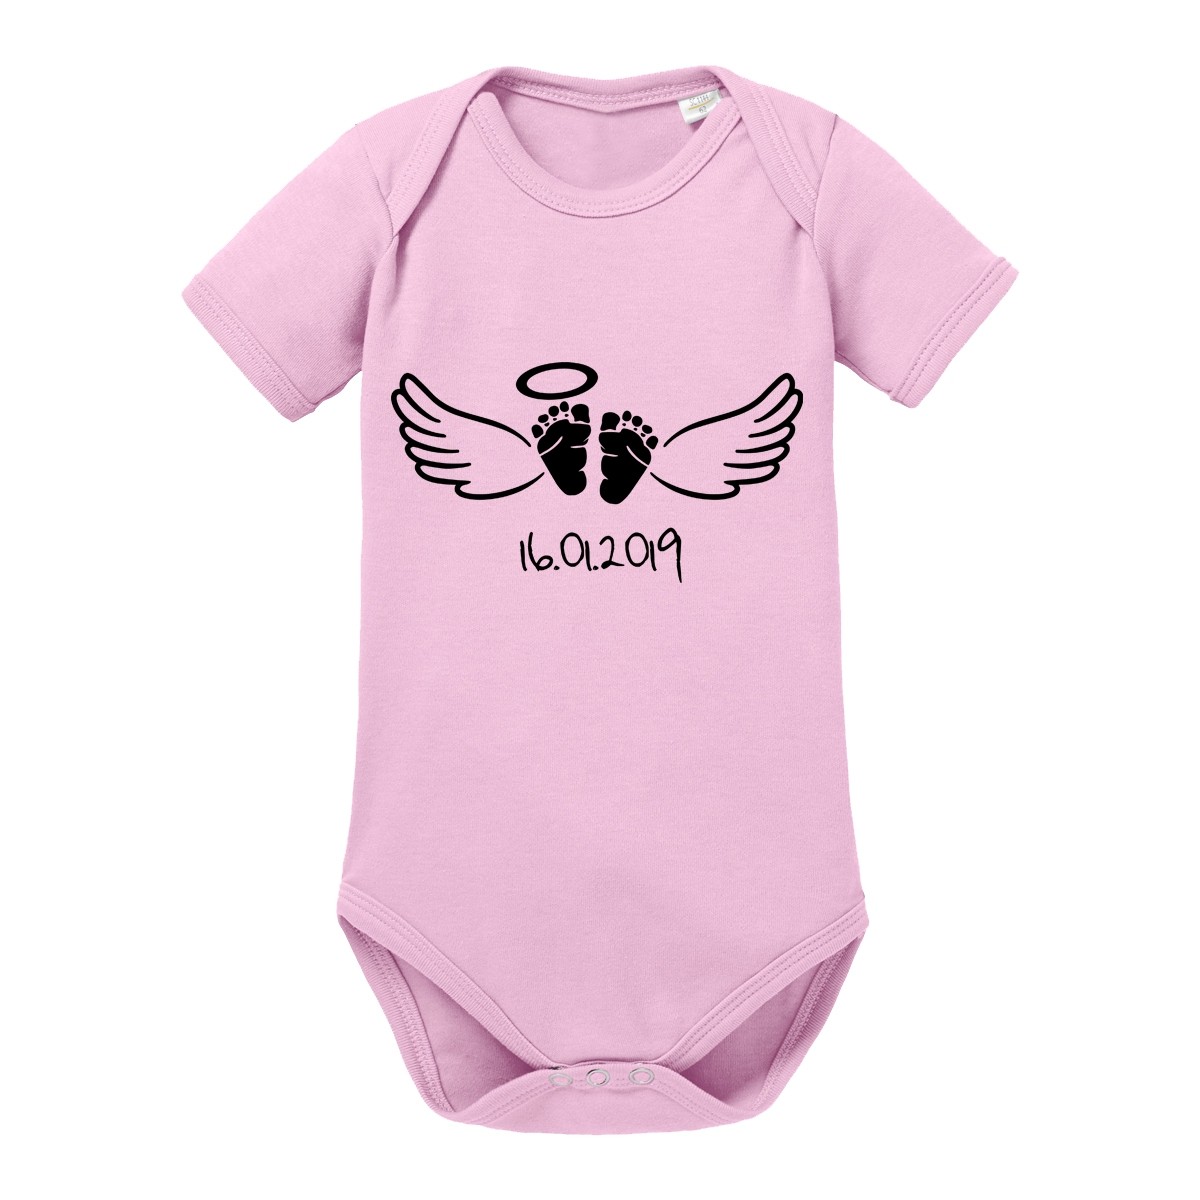 Babybody - BABY ANGEL (personalisierbar)